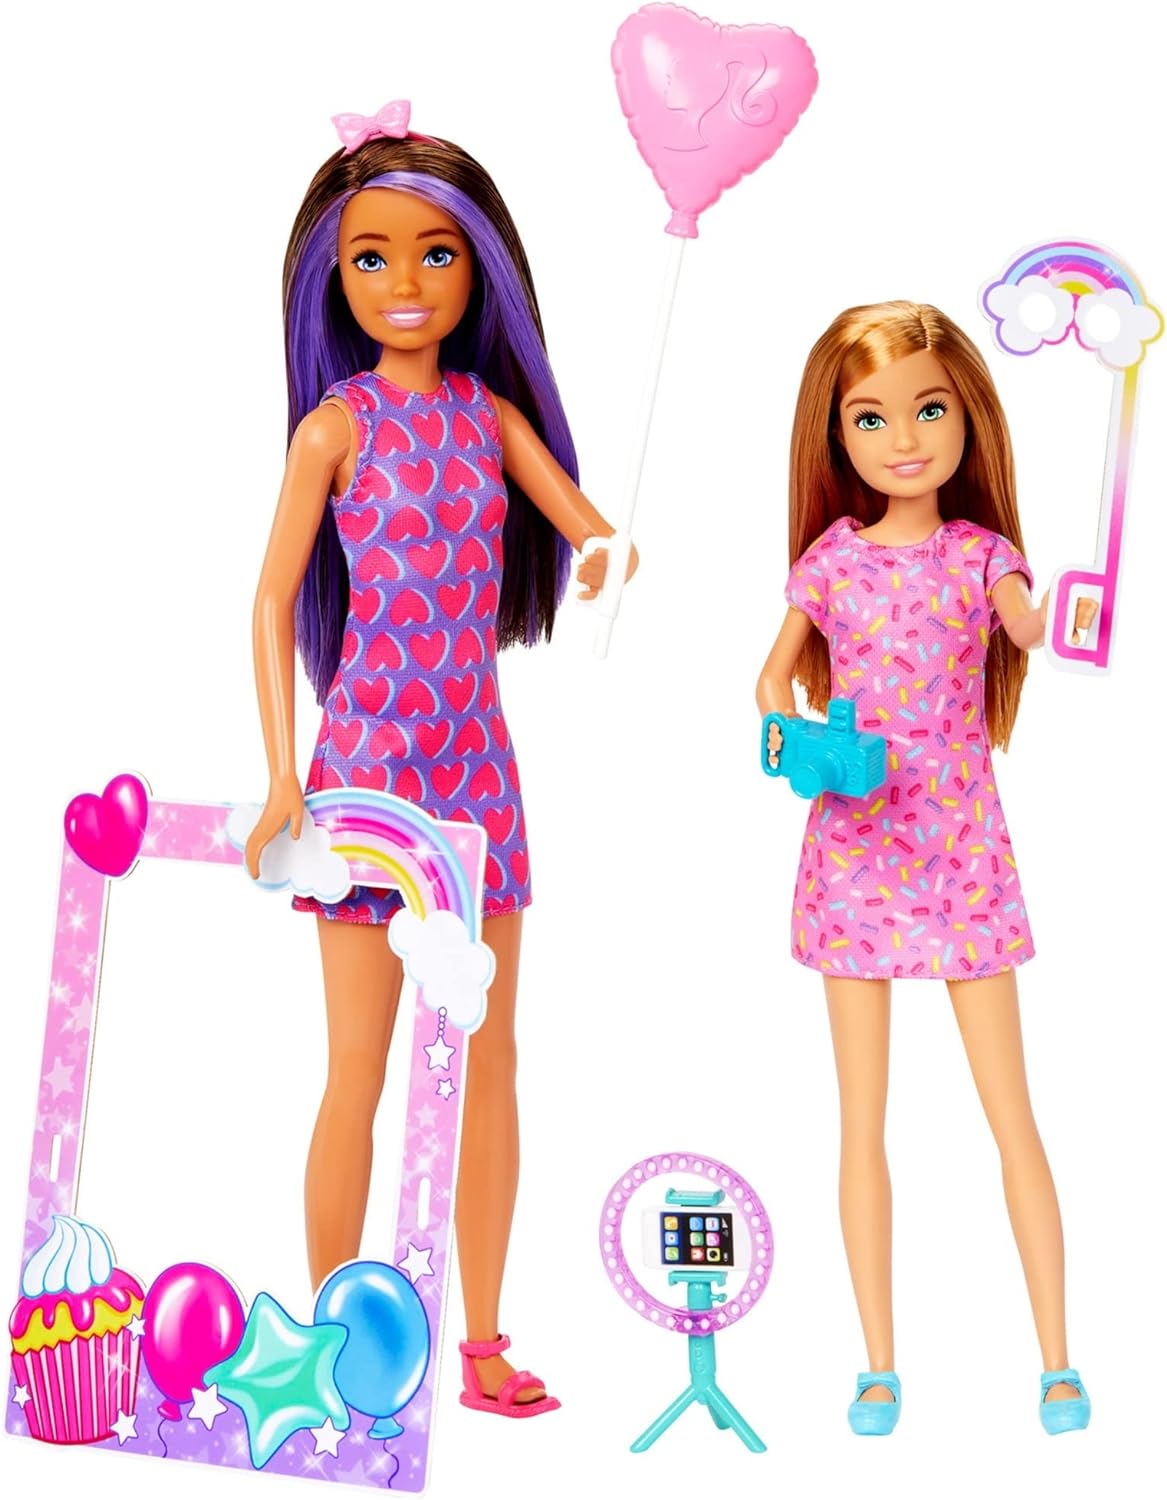 Barbie - Skipper and Stacey